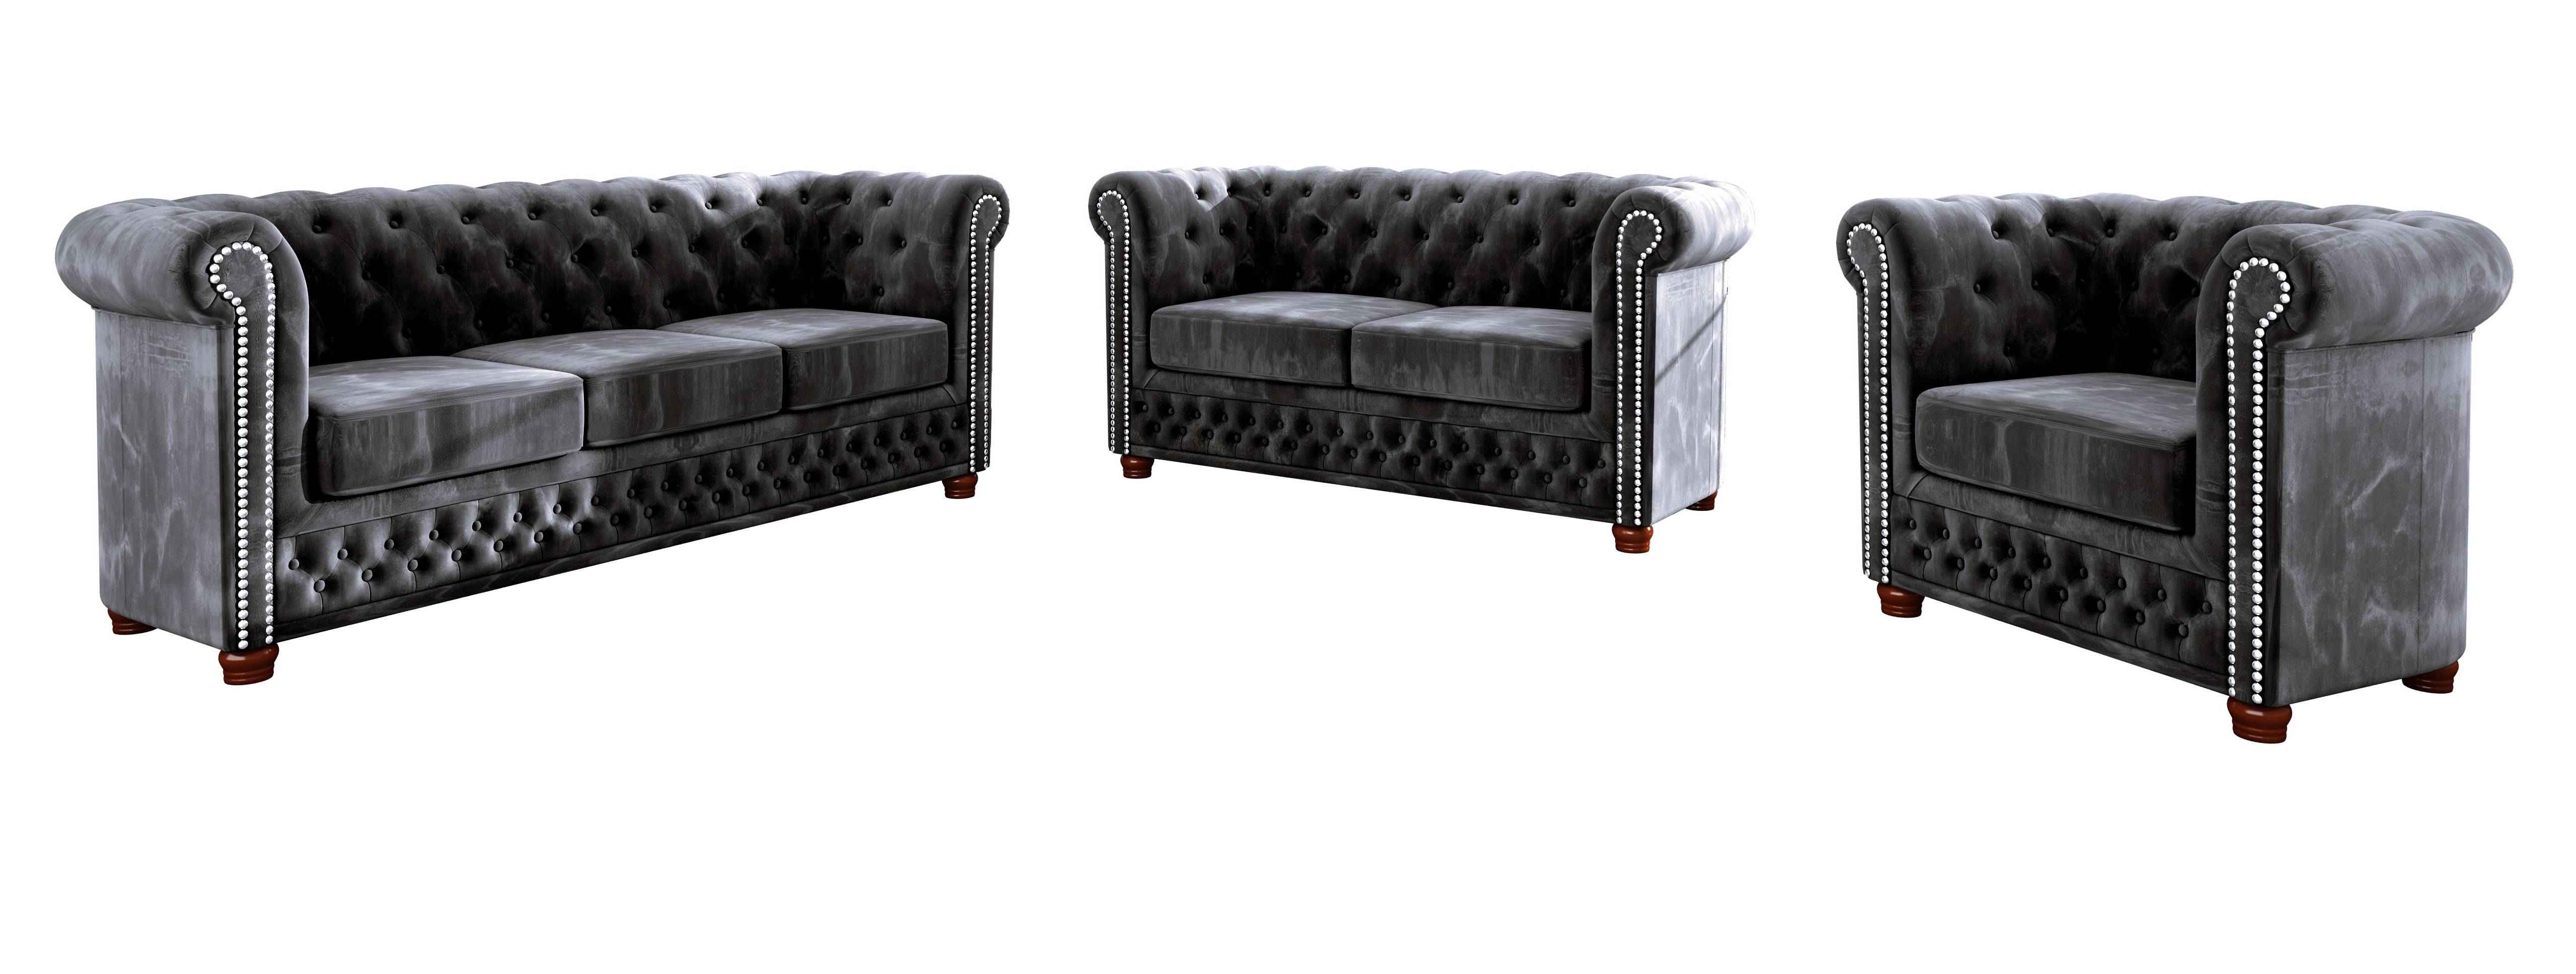 Luxus 3er Sofa Edinburgh eckige Füße, Eckige Füße, schwarz